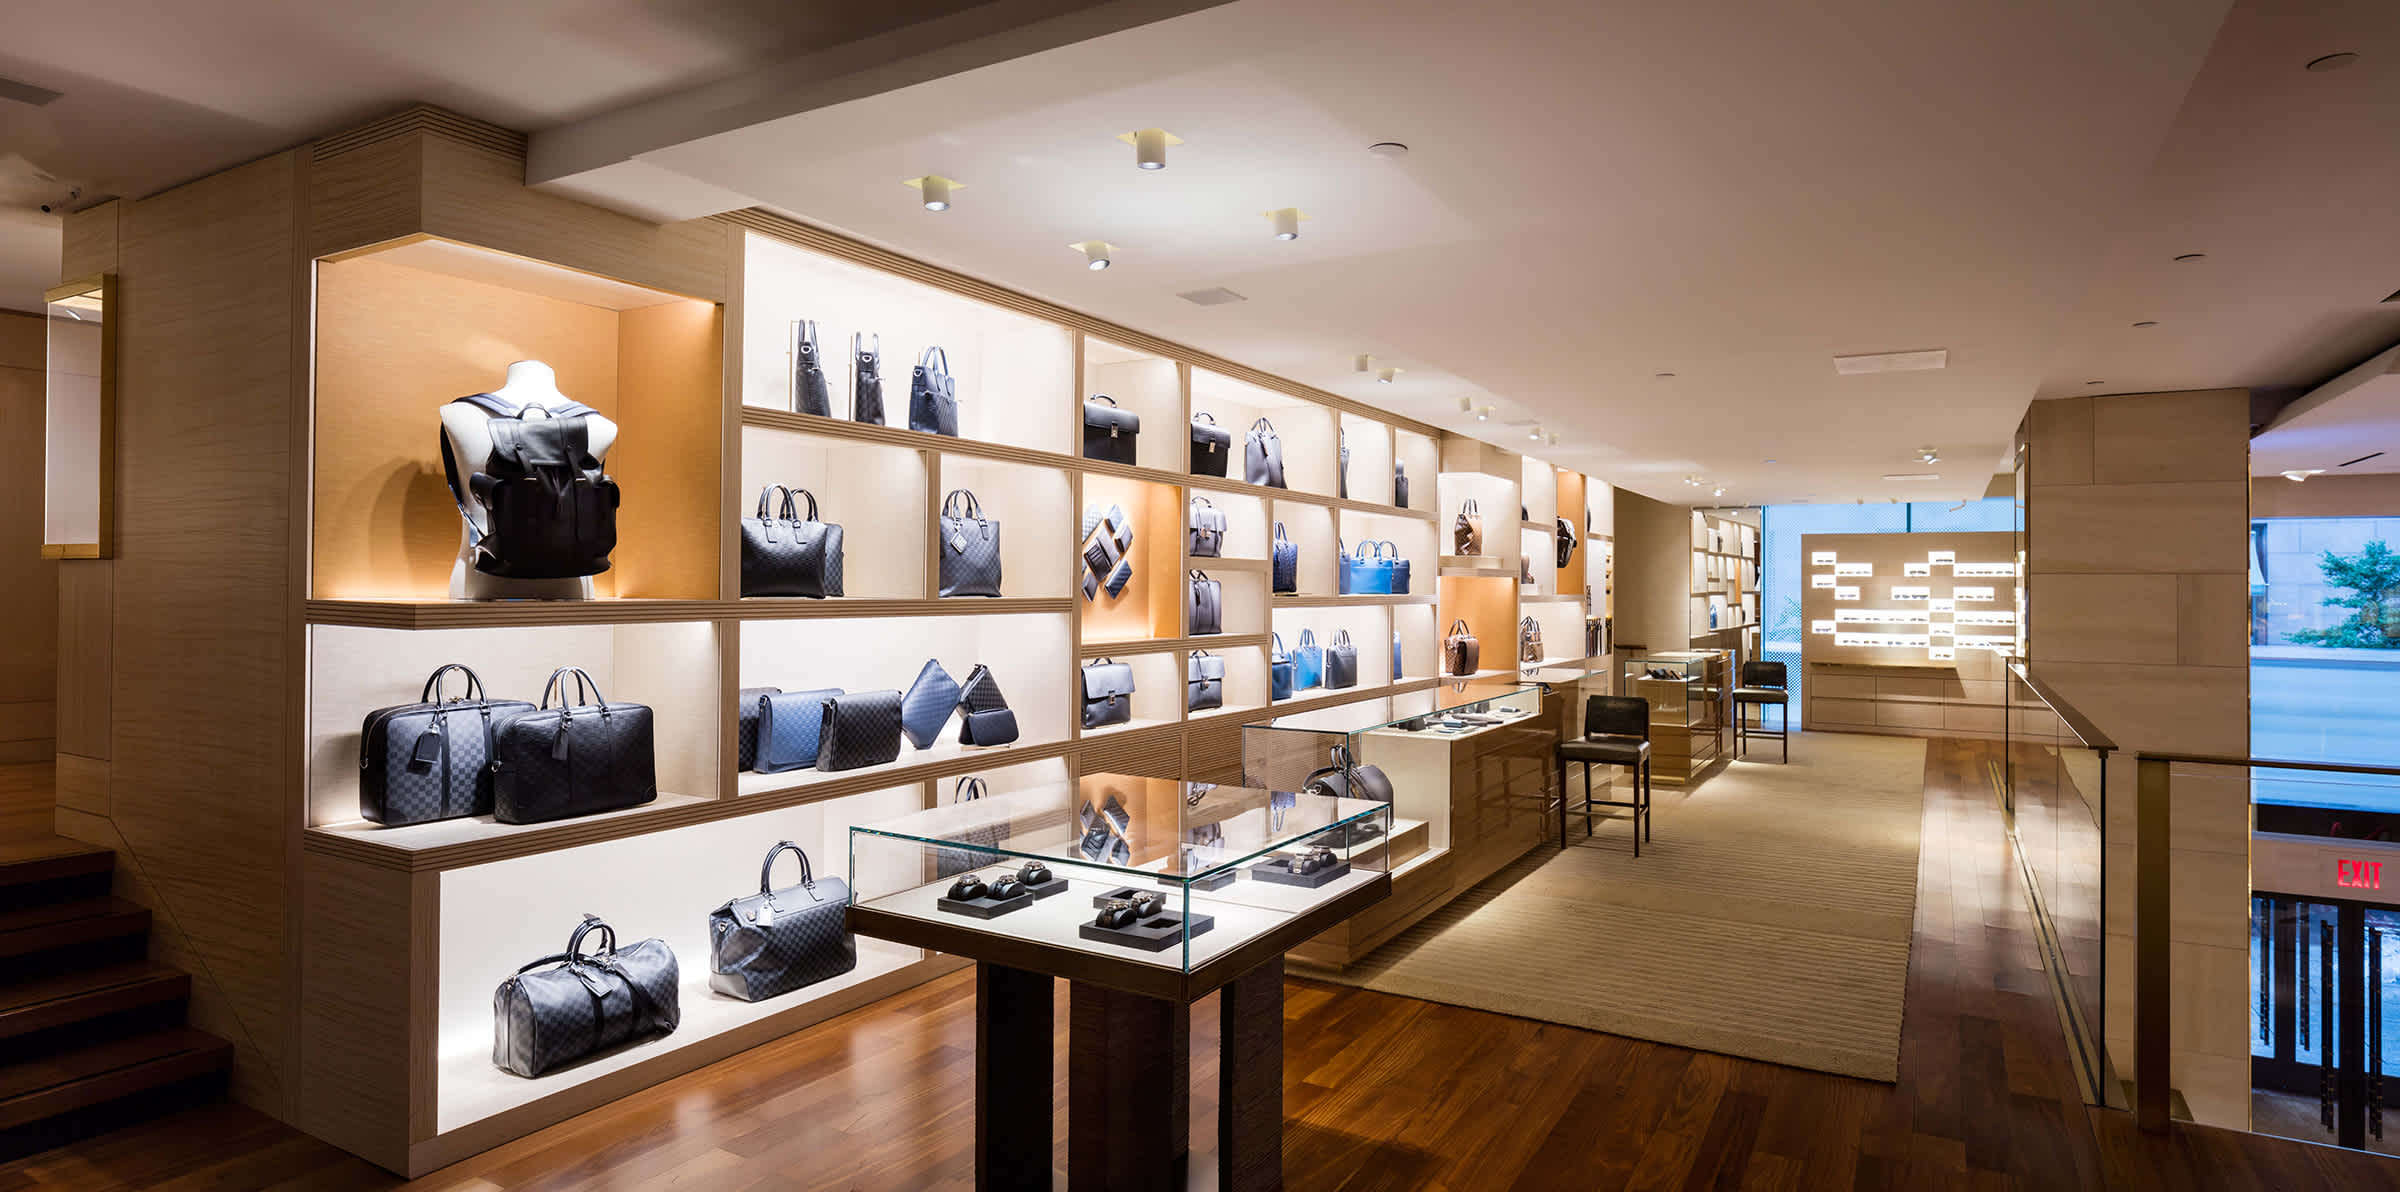 Louis Vuitton New York 5th Avenue